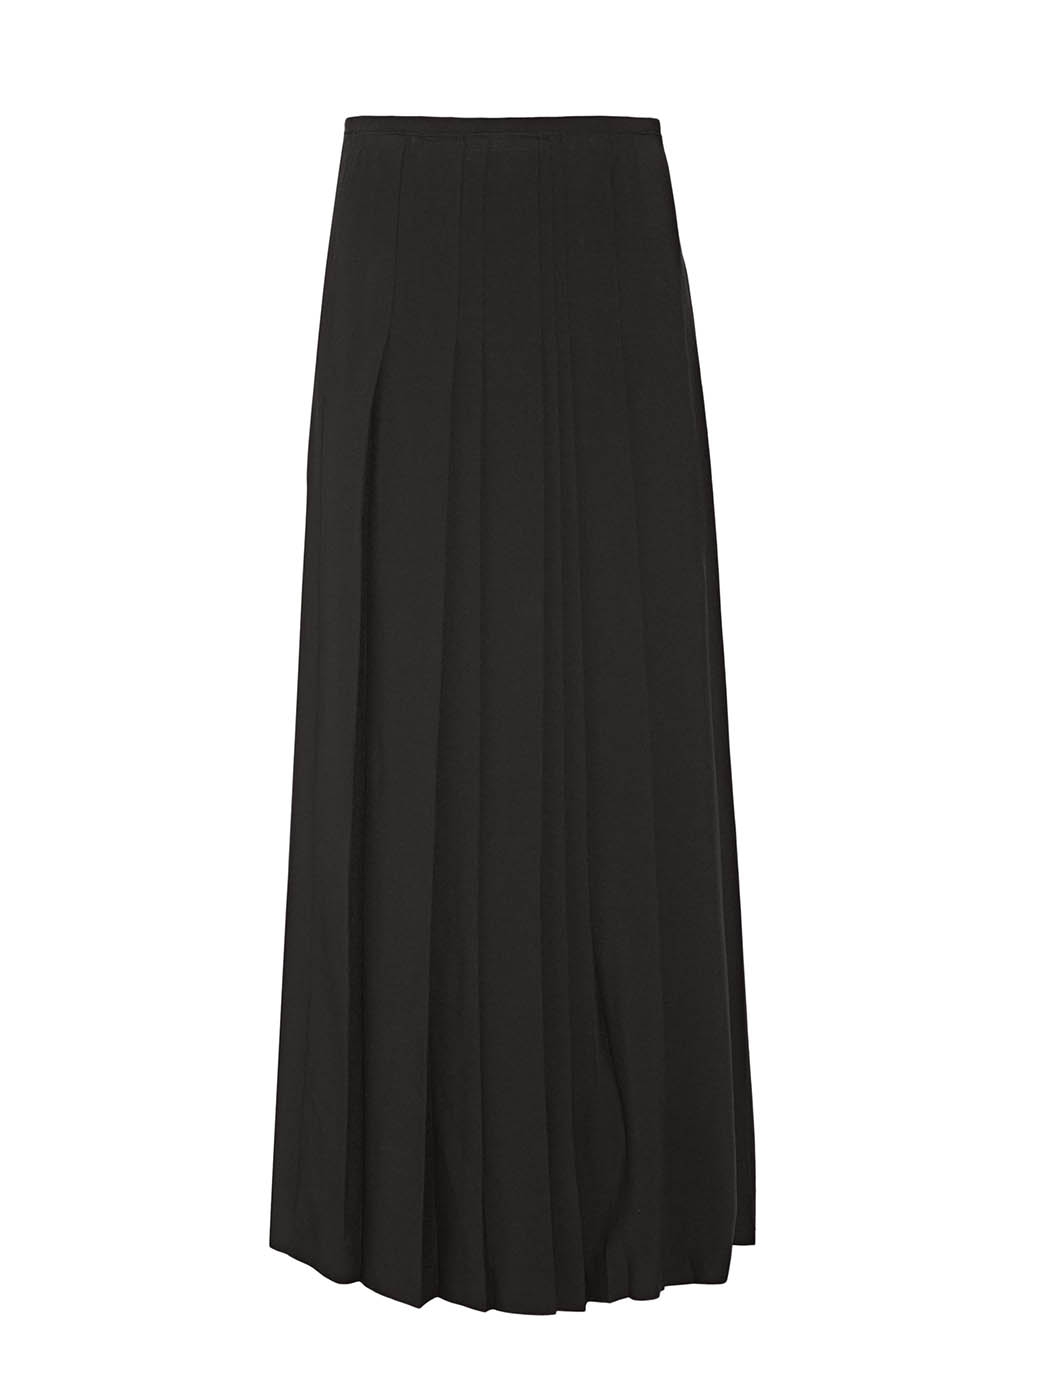 Buy Black Skirts for Women by OTABU Online | Ajio.com